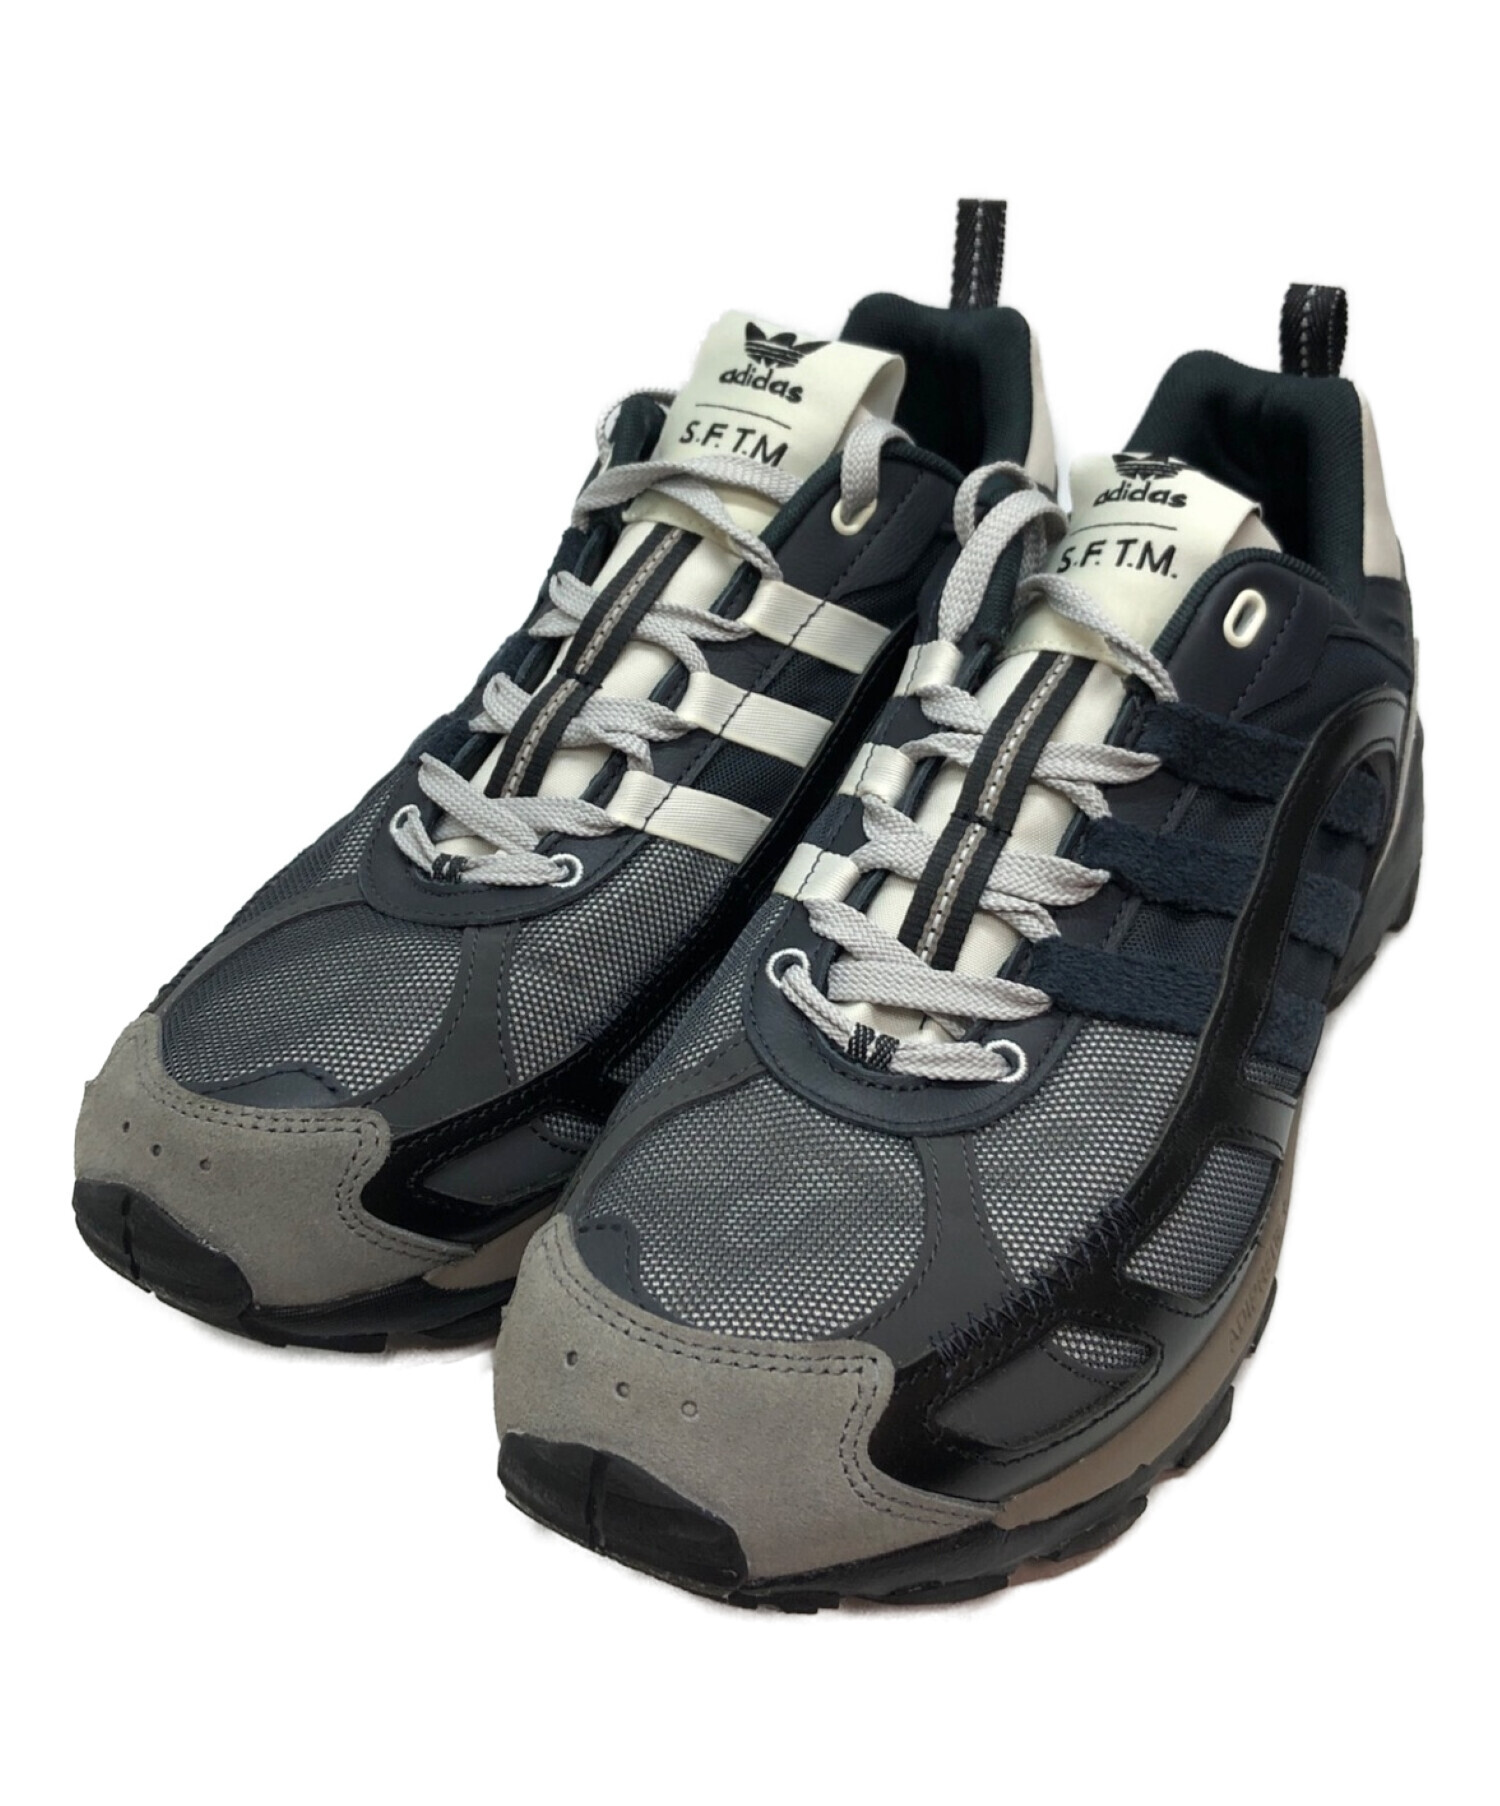 adidas (アディダス) Shadowturf SFTM ブラック サイズ:30